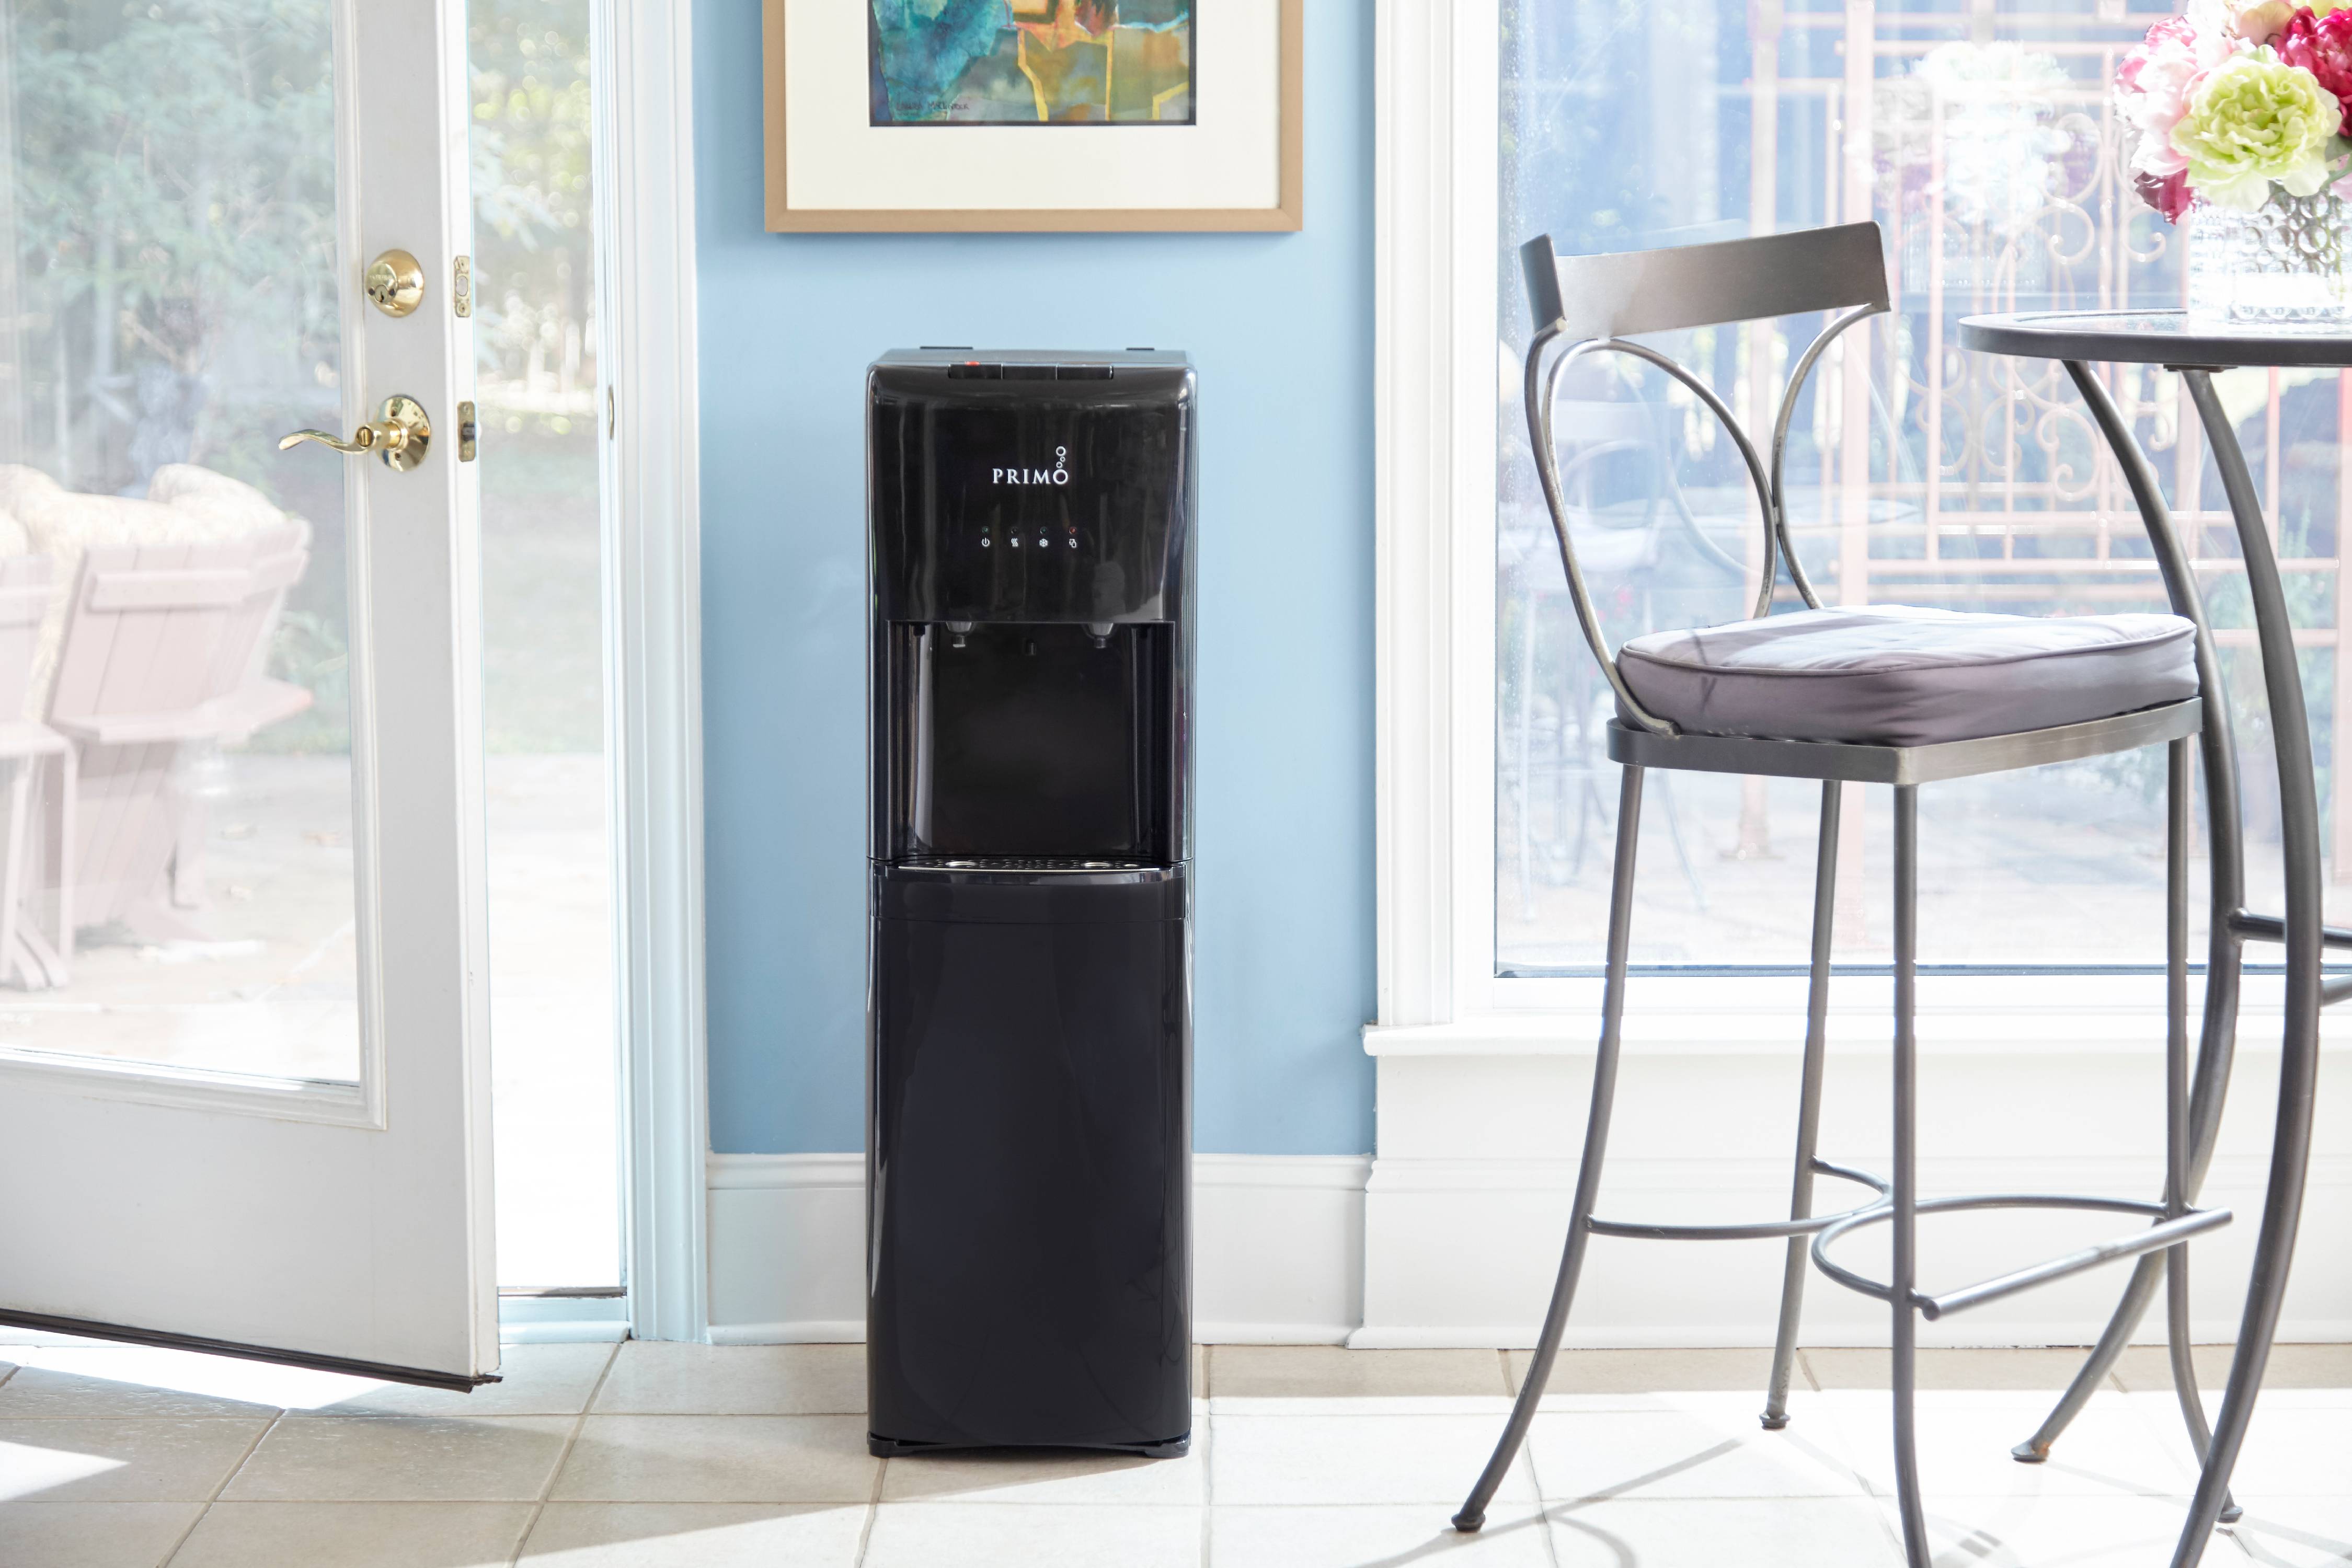 Primo® Water Dispenser Bottom Loading, Hot/Cold Temperature, Black Model 601088 - image 5 of 10